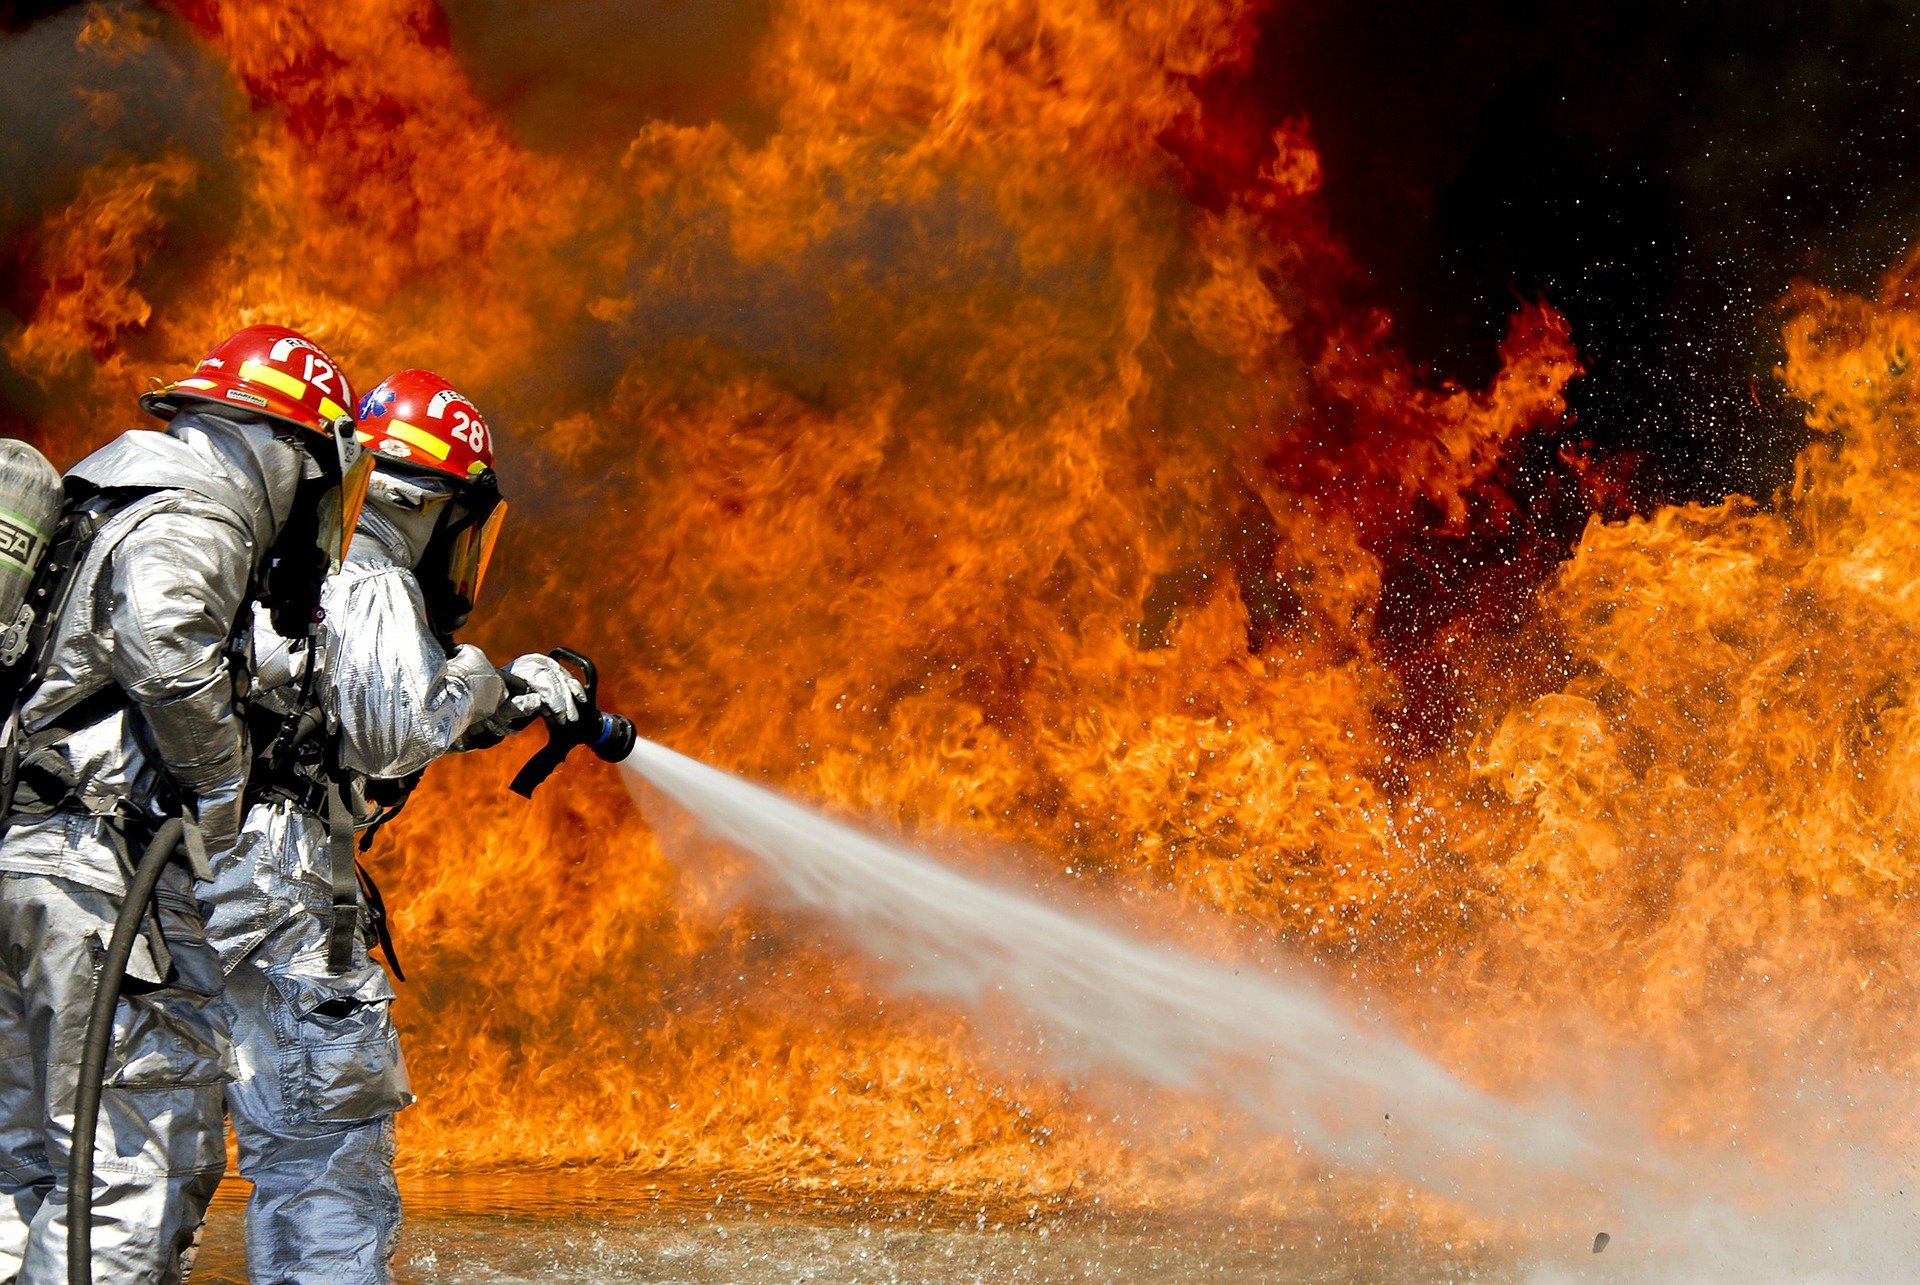 Battling flames increases firefighters' exposure to carcinogens